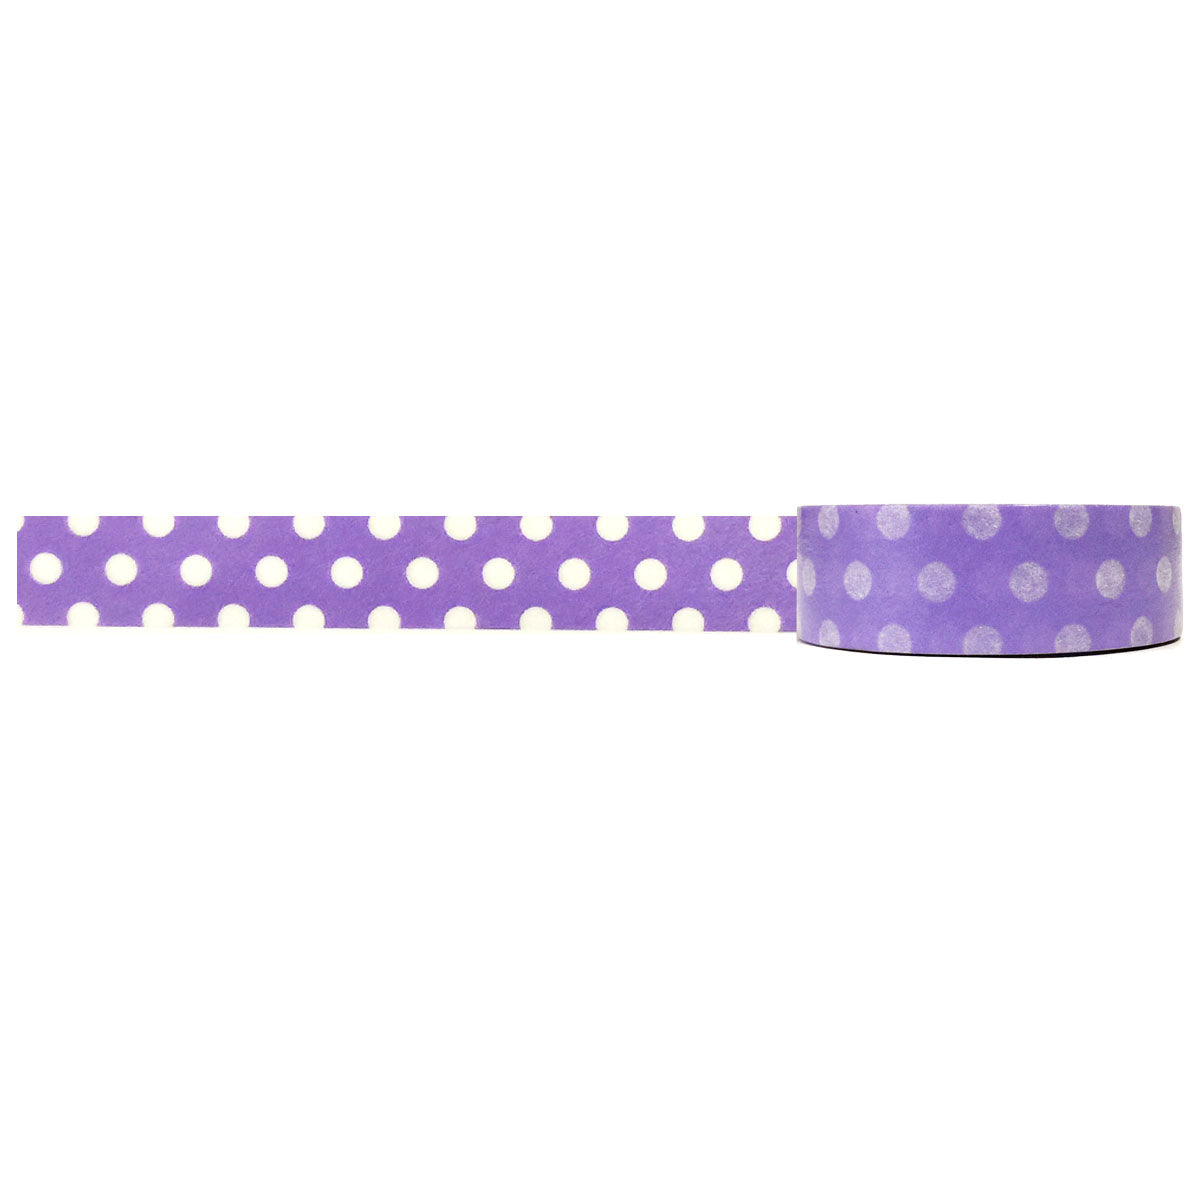 Wrapables Washi Masking Tape, Blue and Purple Group